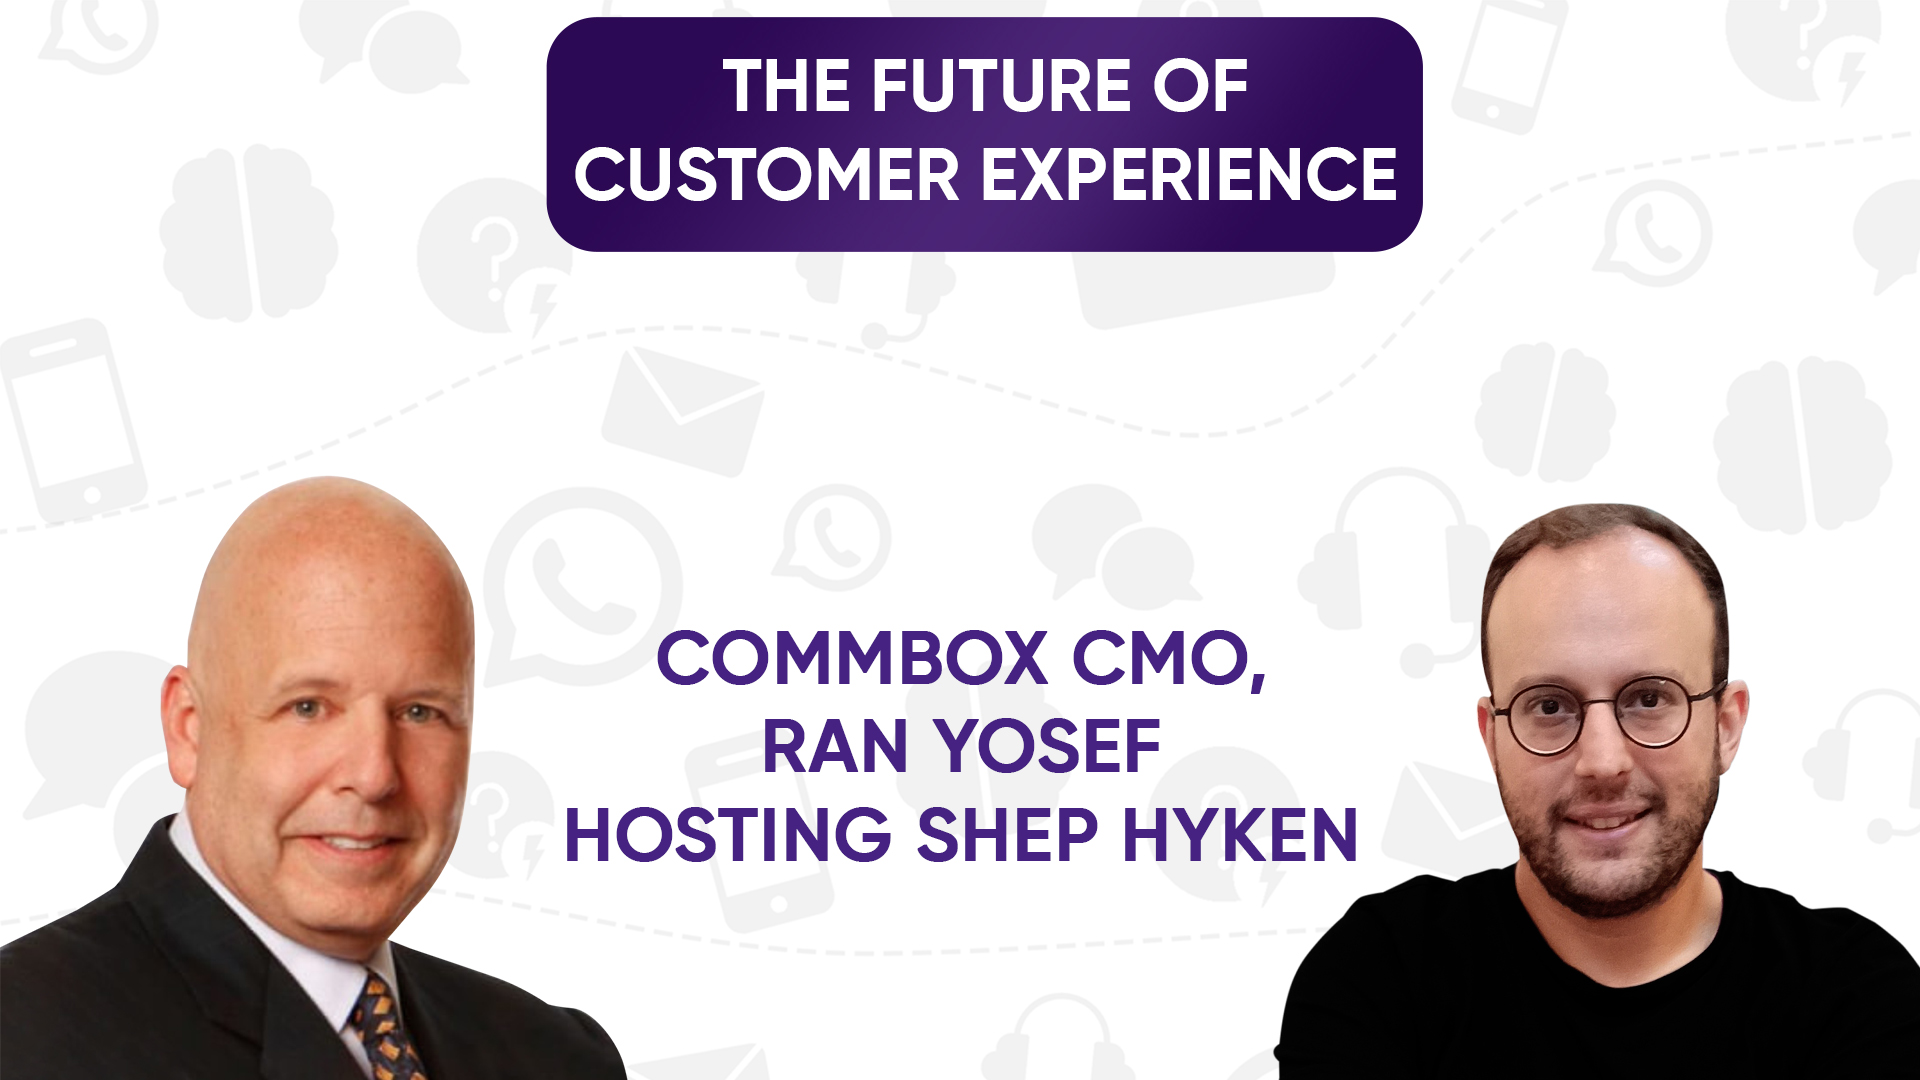 The future of customer experience - CommBox CMO, Ran Yosef hosting Shep Hyken